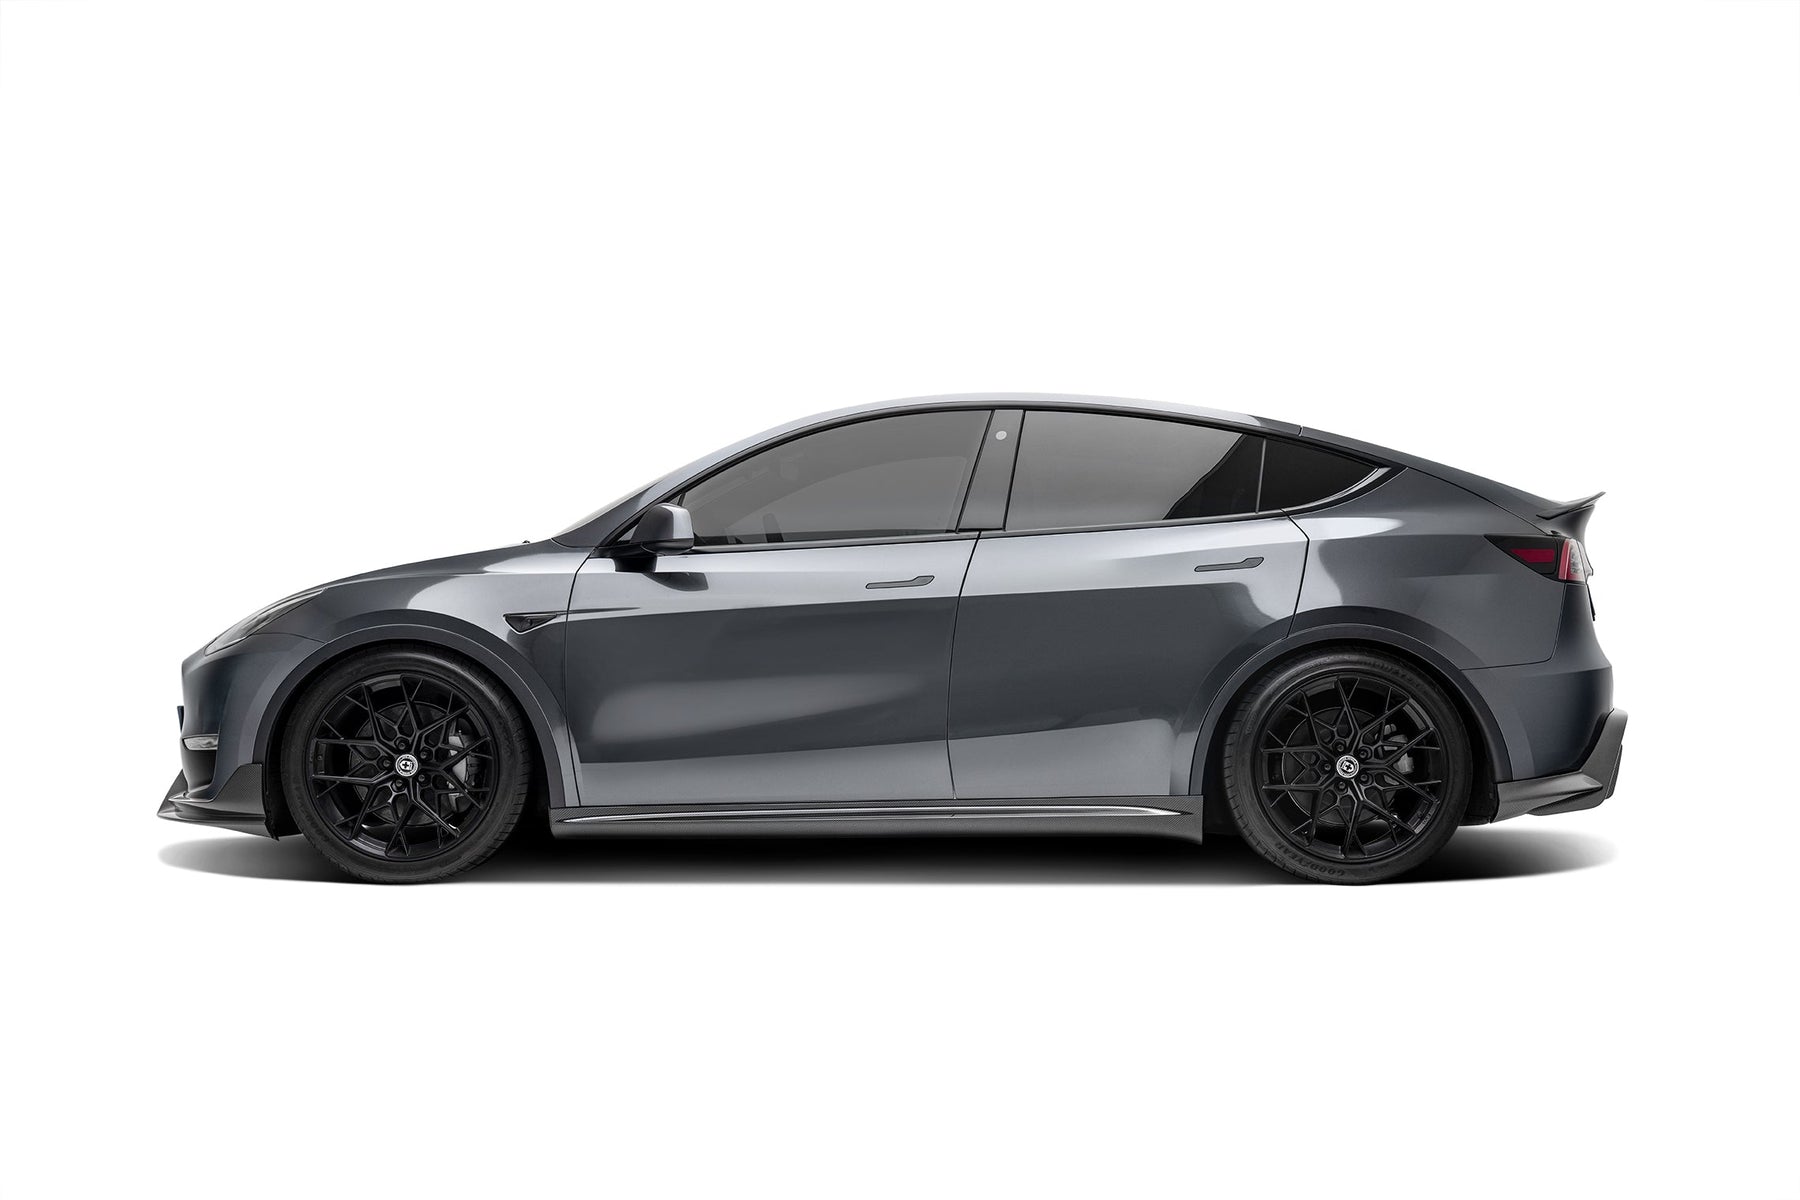 Adro Tesla Model Y Premium Prepeg Carbon Fiber Full Body Kit